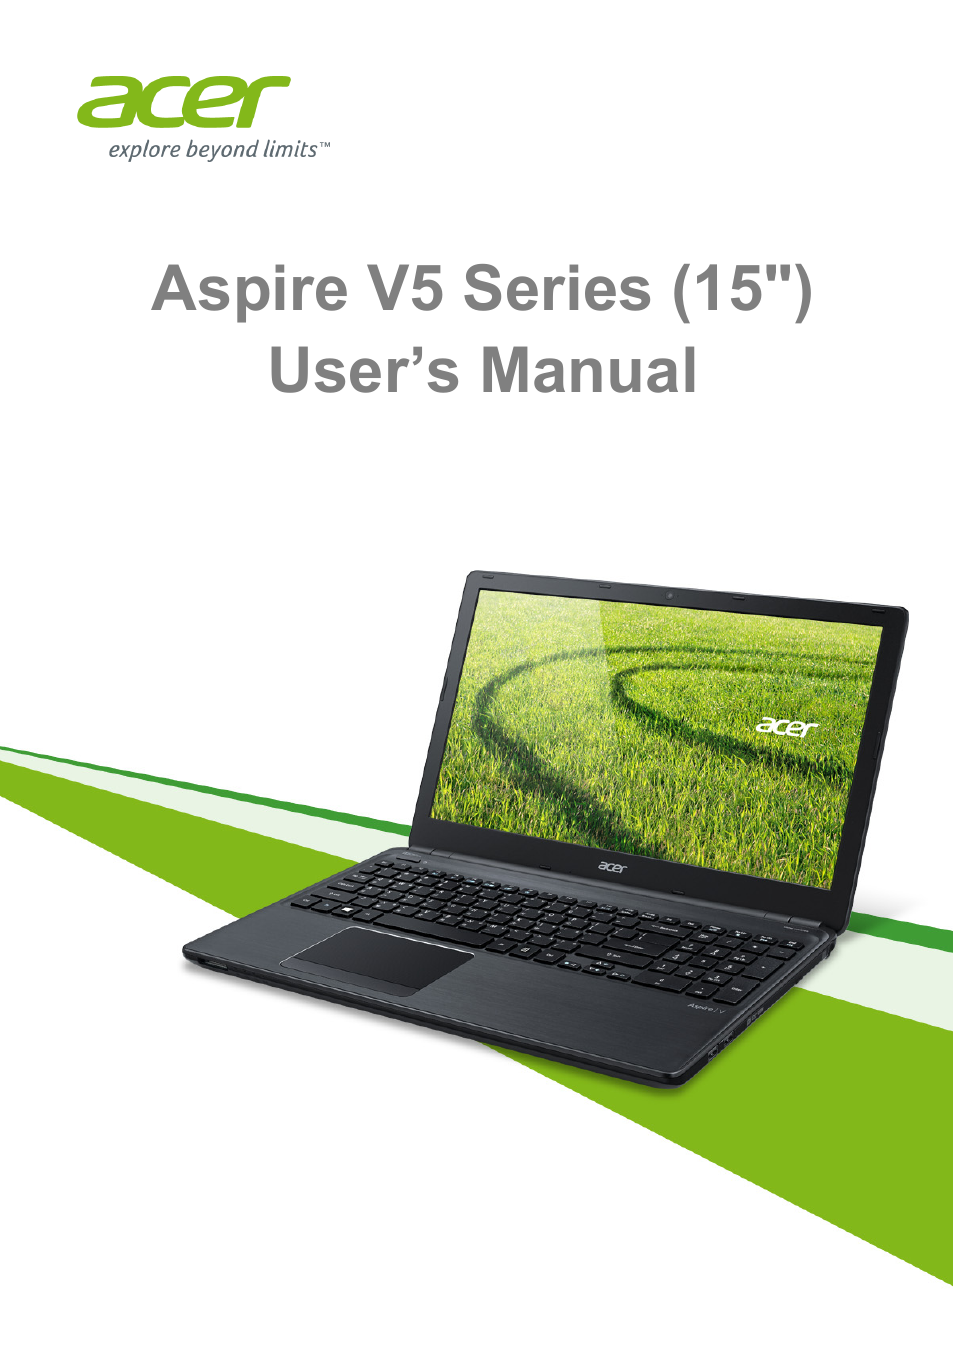 Acer Aspire V5-561G User Manual | 85 pages | Also for: Aspire V5-561P, Aspire  V5-561, Aspire V5-561PG